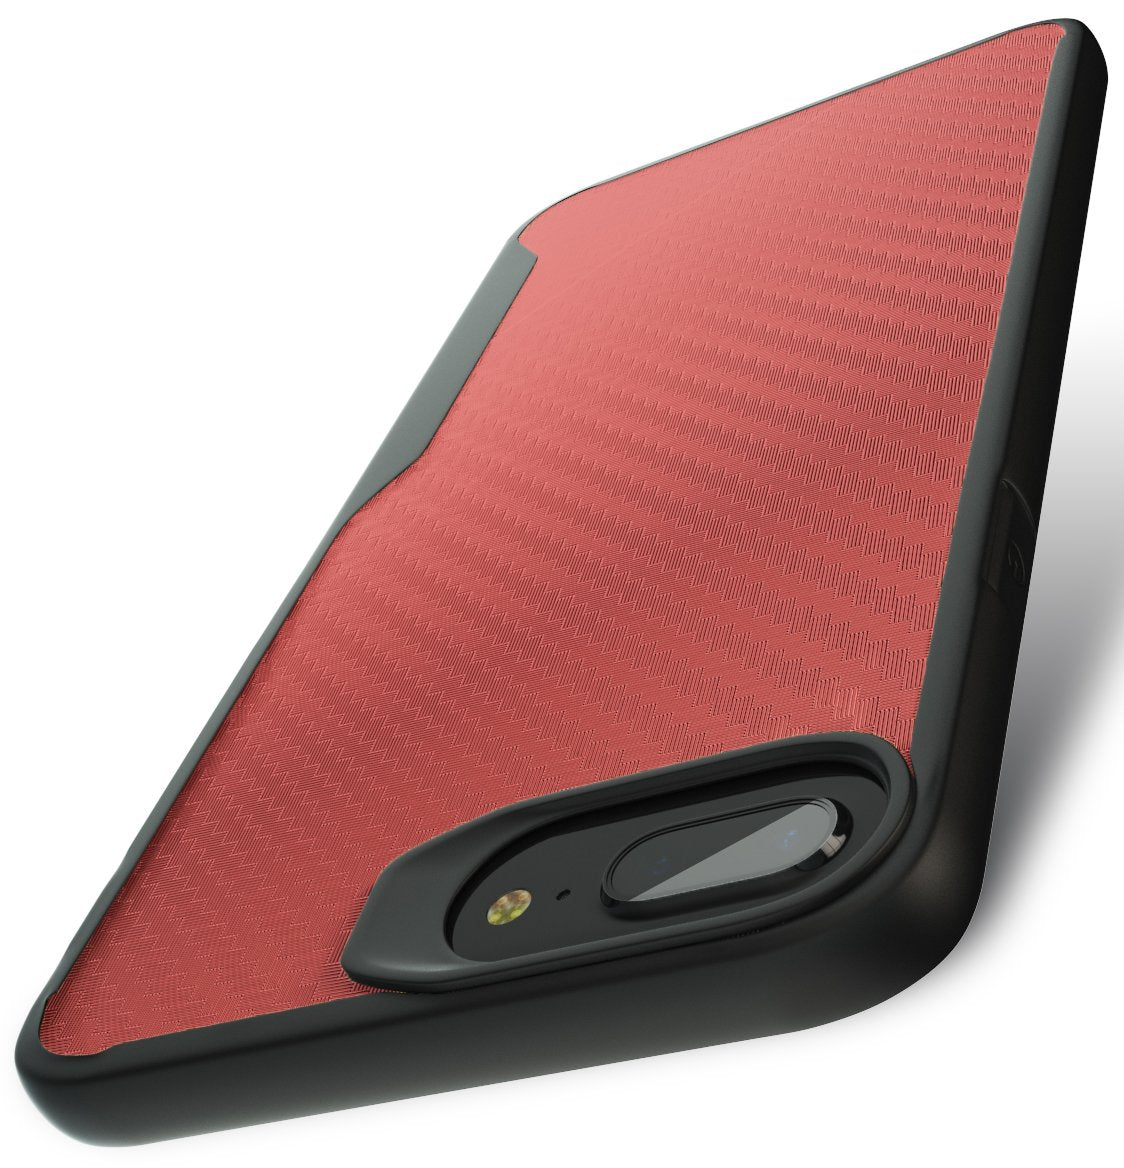 iPhone 7 Plus / iPhone 8 Plus Kitoo Carbon Fiber Pattern Case Red